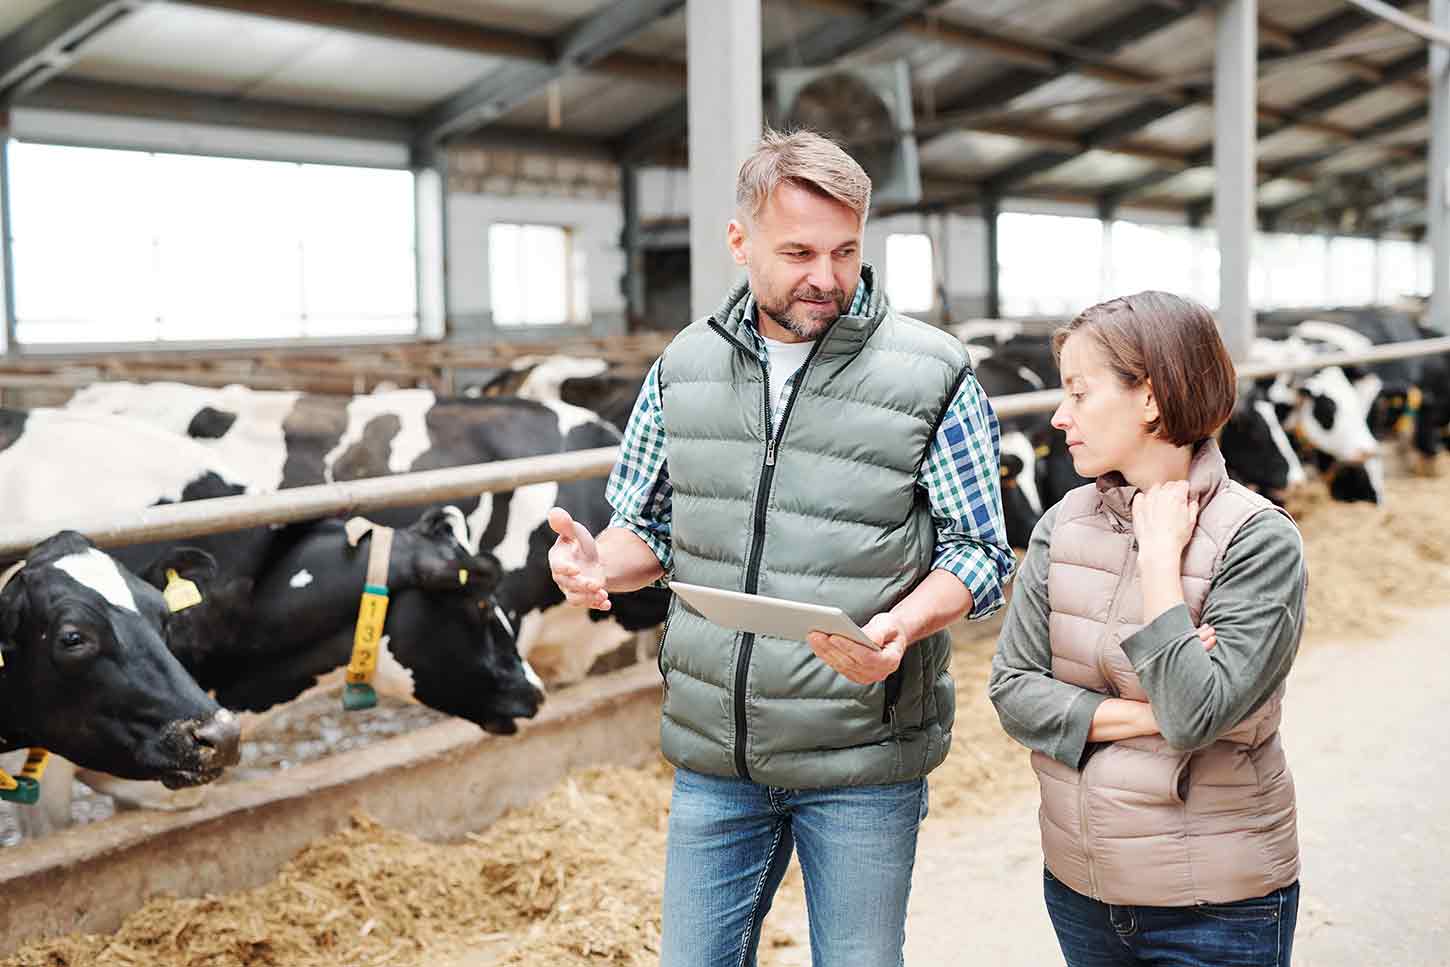 vet farmer communication on farm IMAGE: pressmaster / Adobe Stock